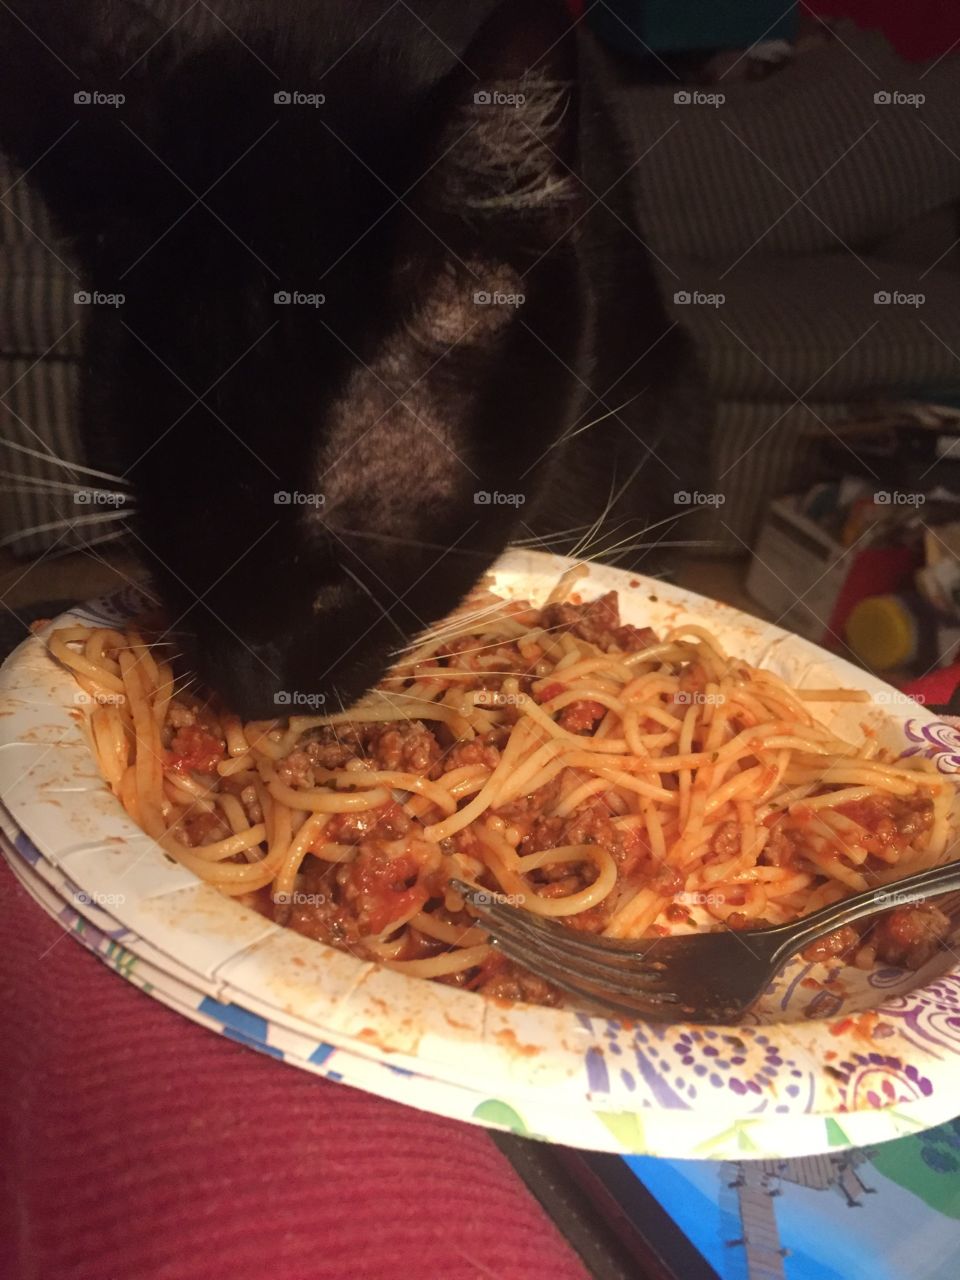 Cat eating spaghetti 